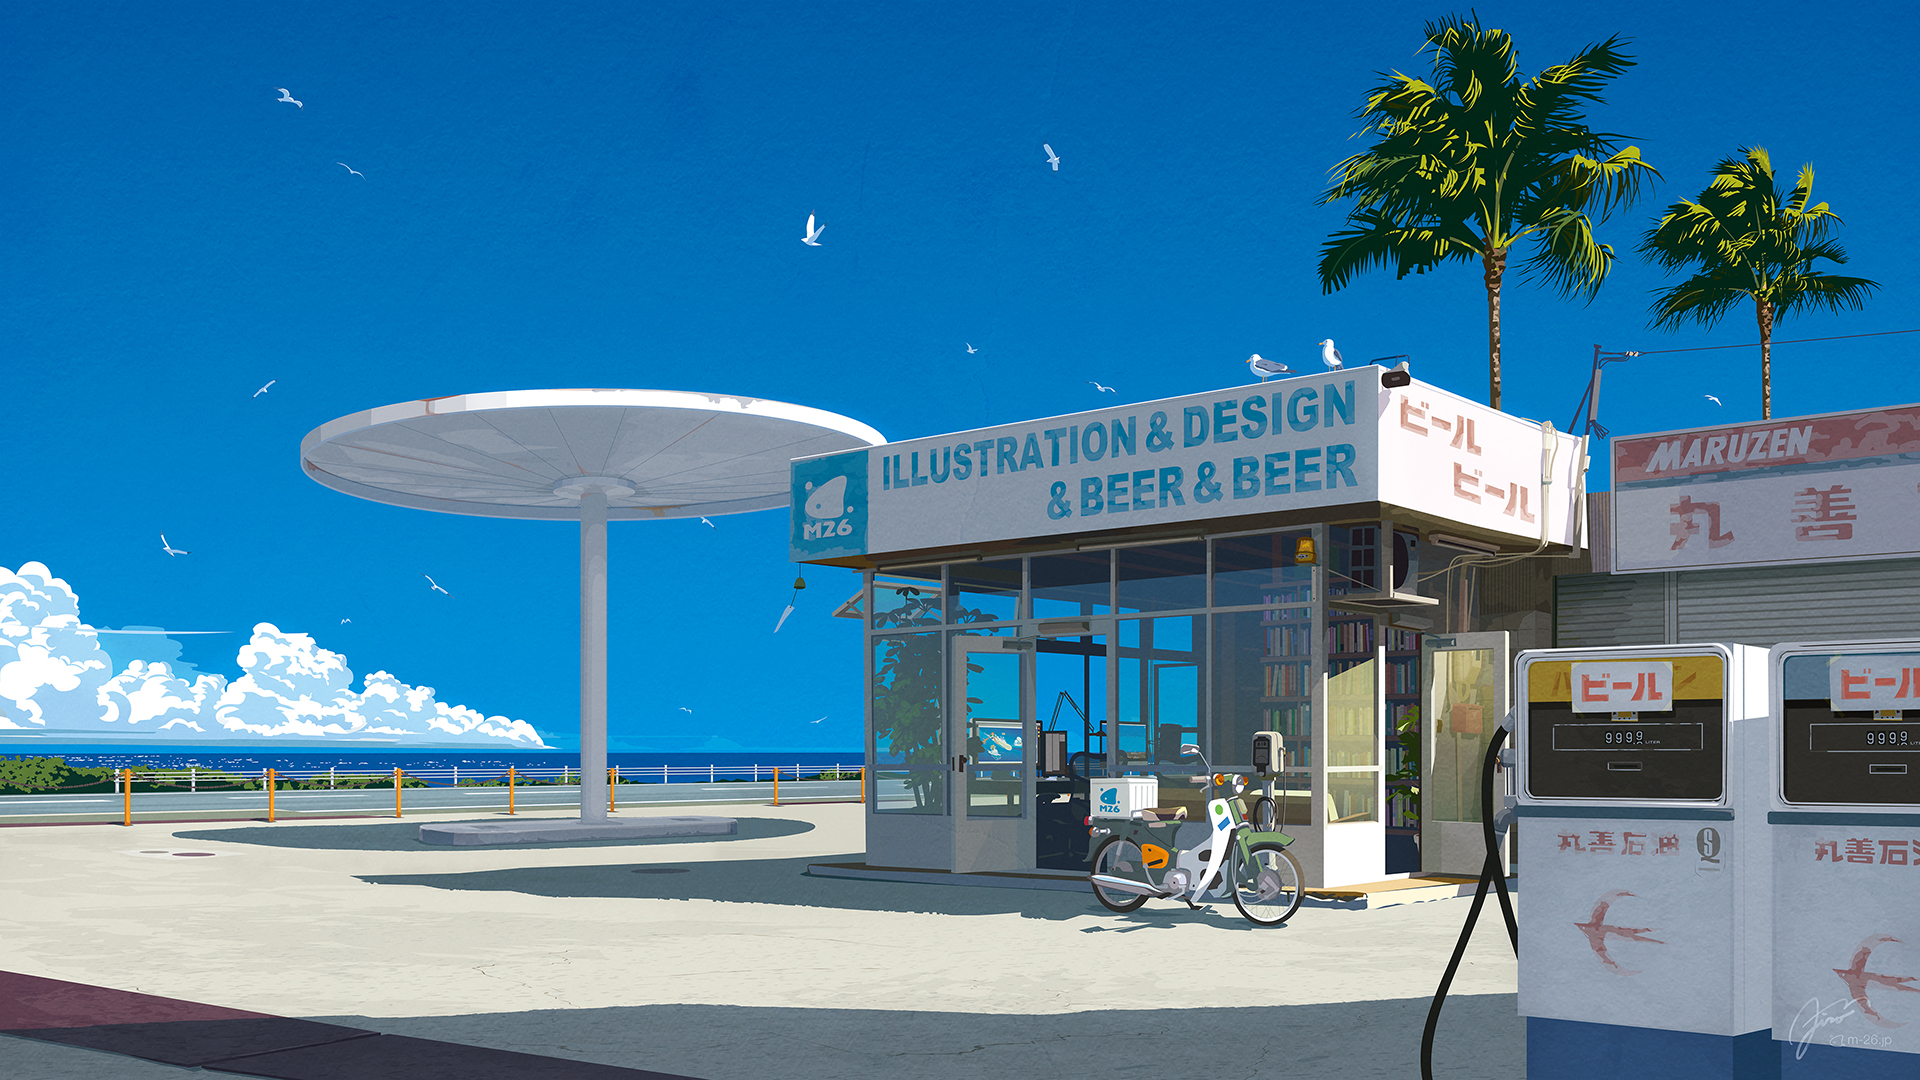 Beach Art Installation Sunlight Gas Station American Flag Swimwear Digital Art Sky Clouds Palm Trees 1920x1080